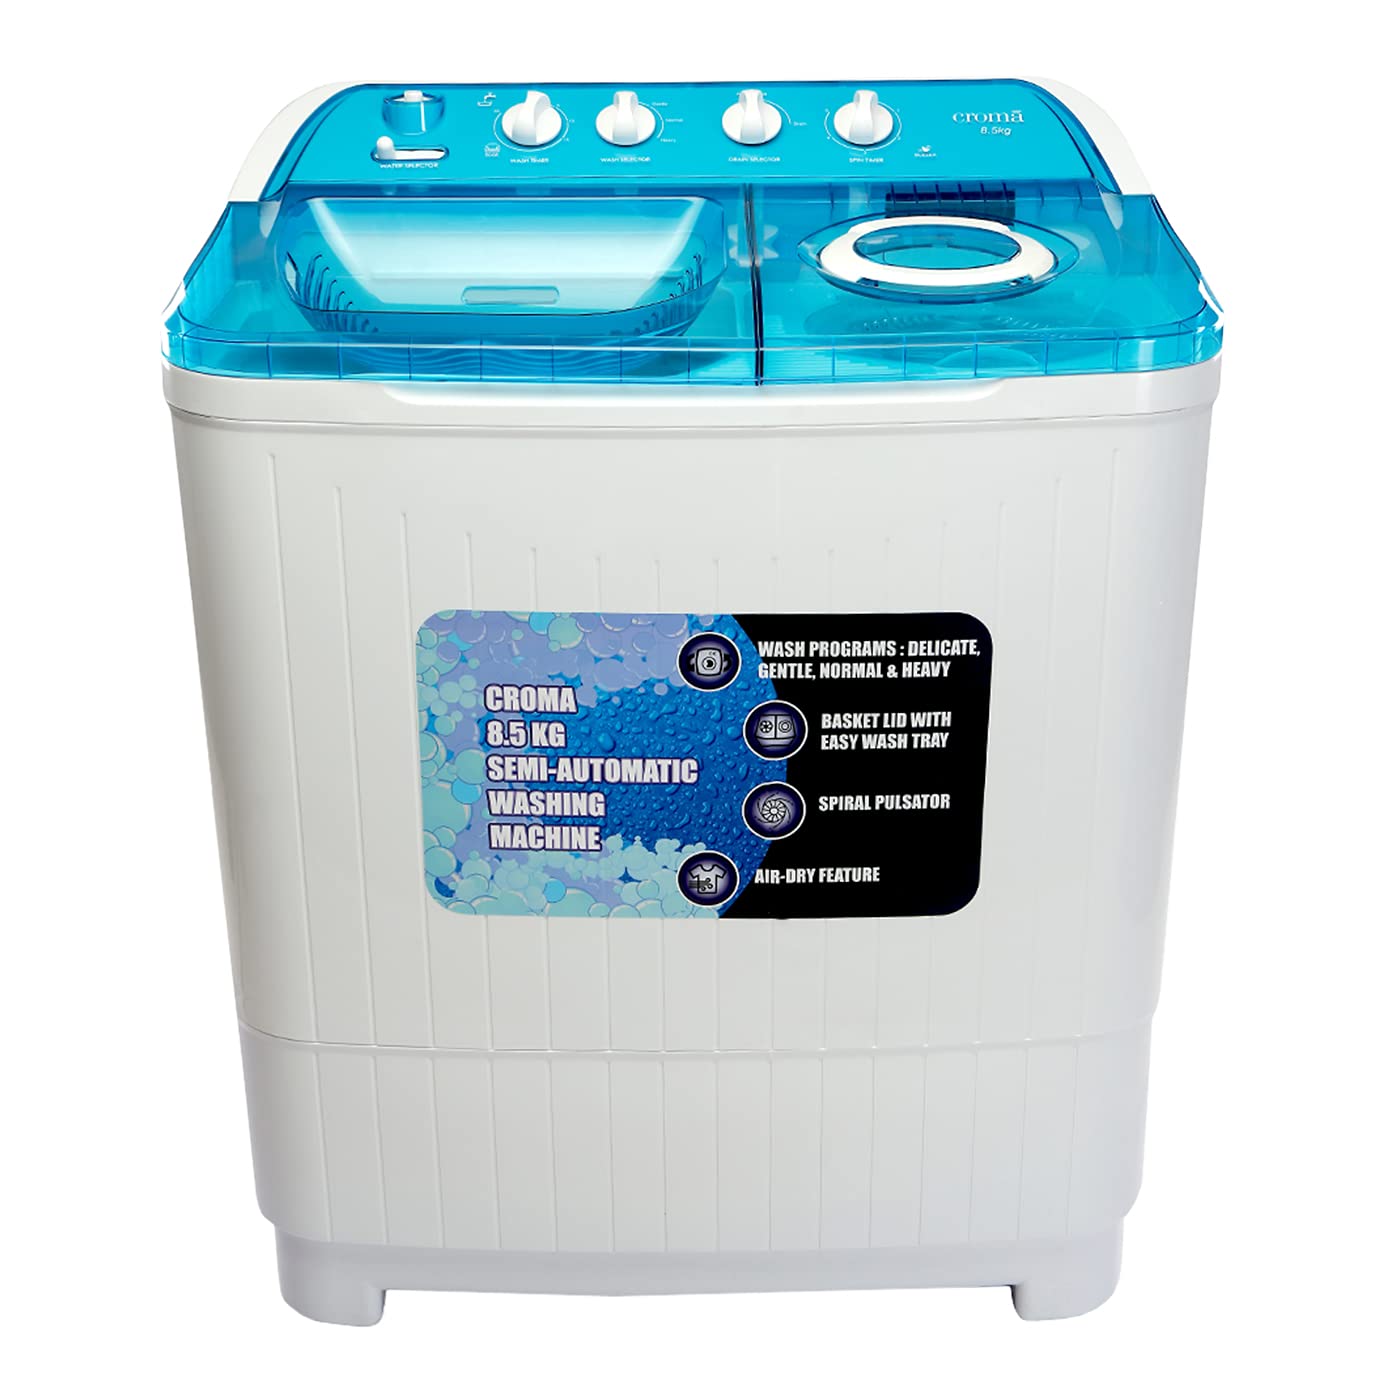  Croma 8.5 kg Semi Automatic Top Load Washing Machine (CRAW2222, White)